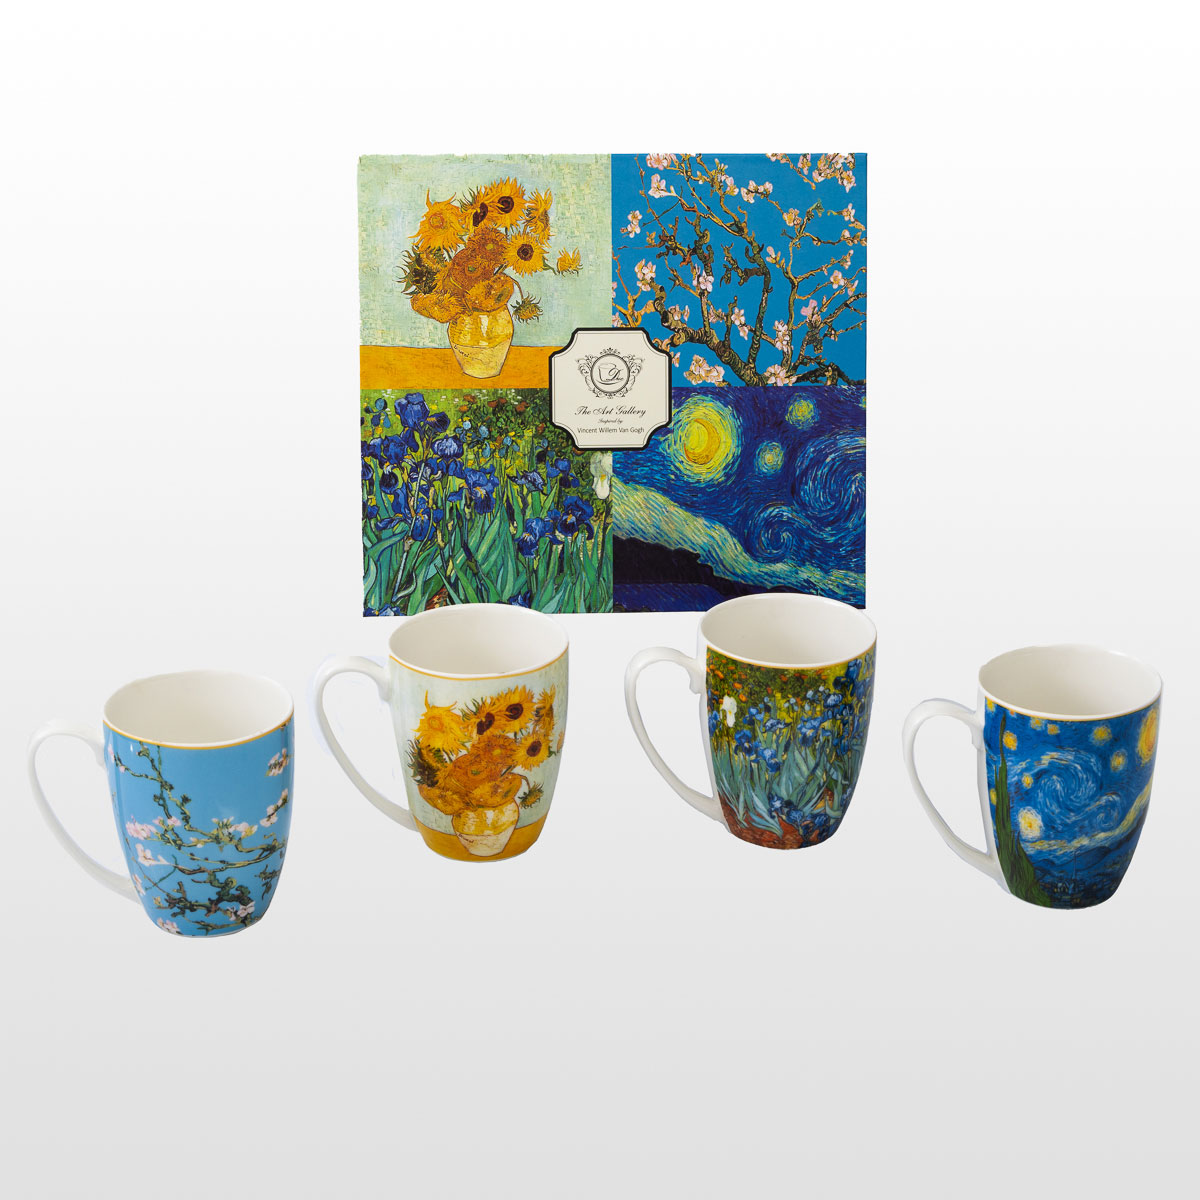 4 Vincent Van Gogh mugs (in a gift box), detail n°1